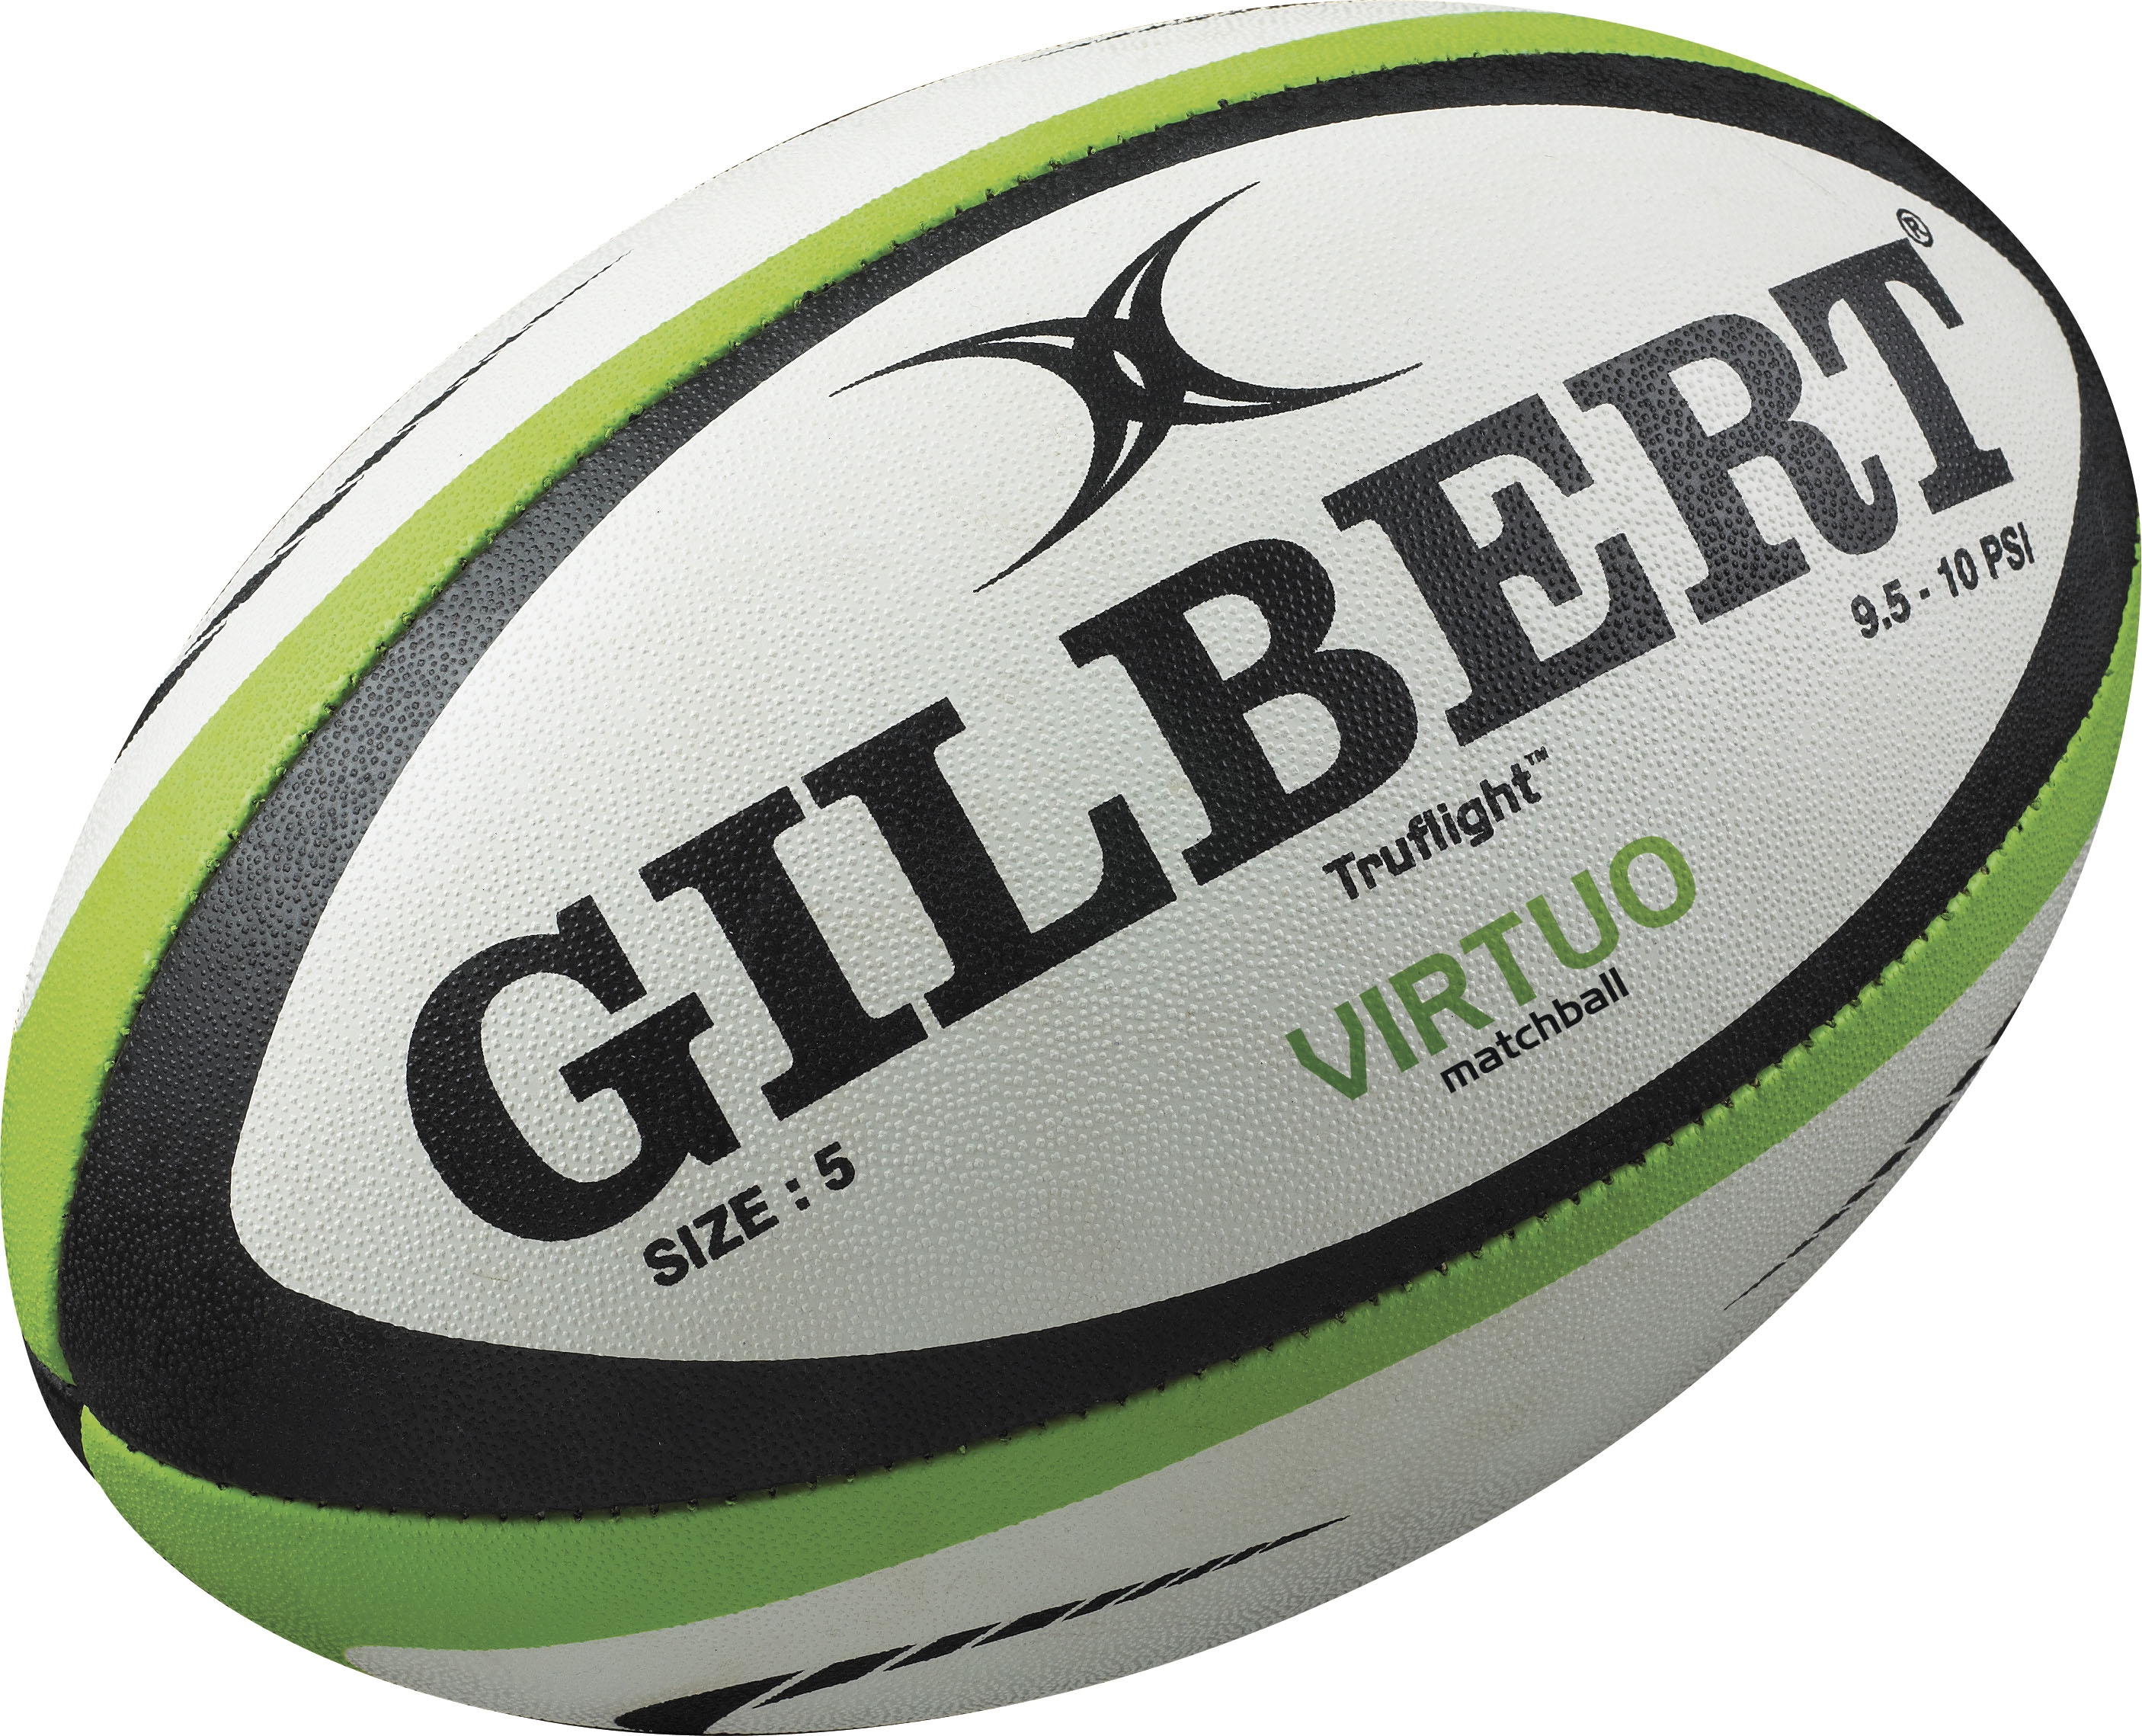 Ballon Rugby Gilbert - Virtuo Généric Noir/vert Noir